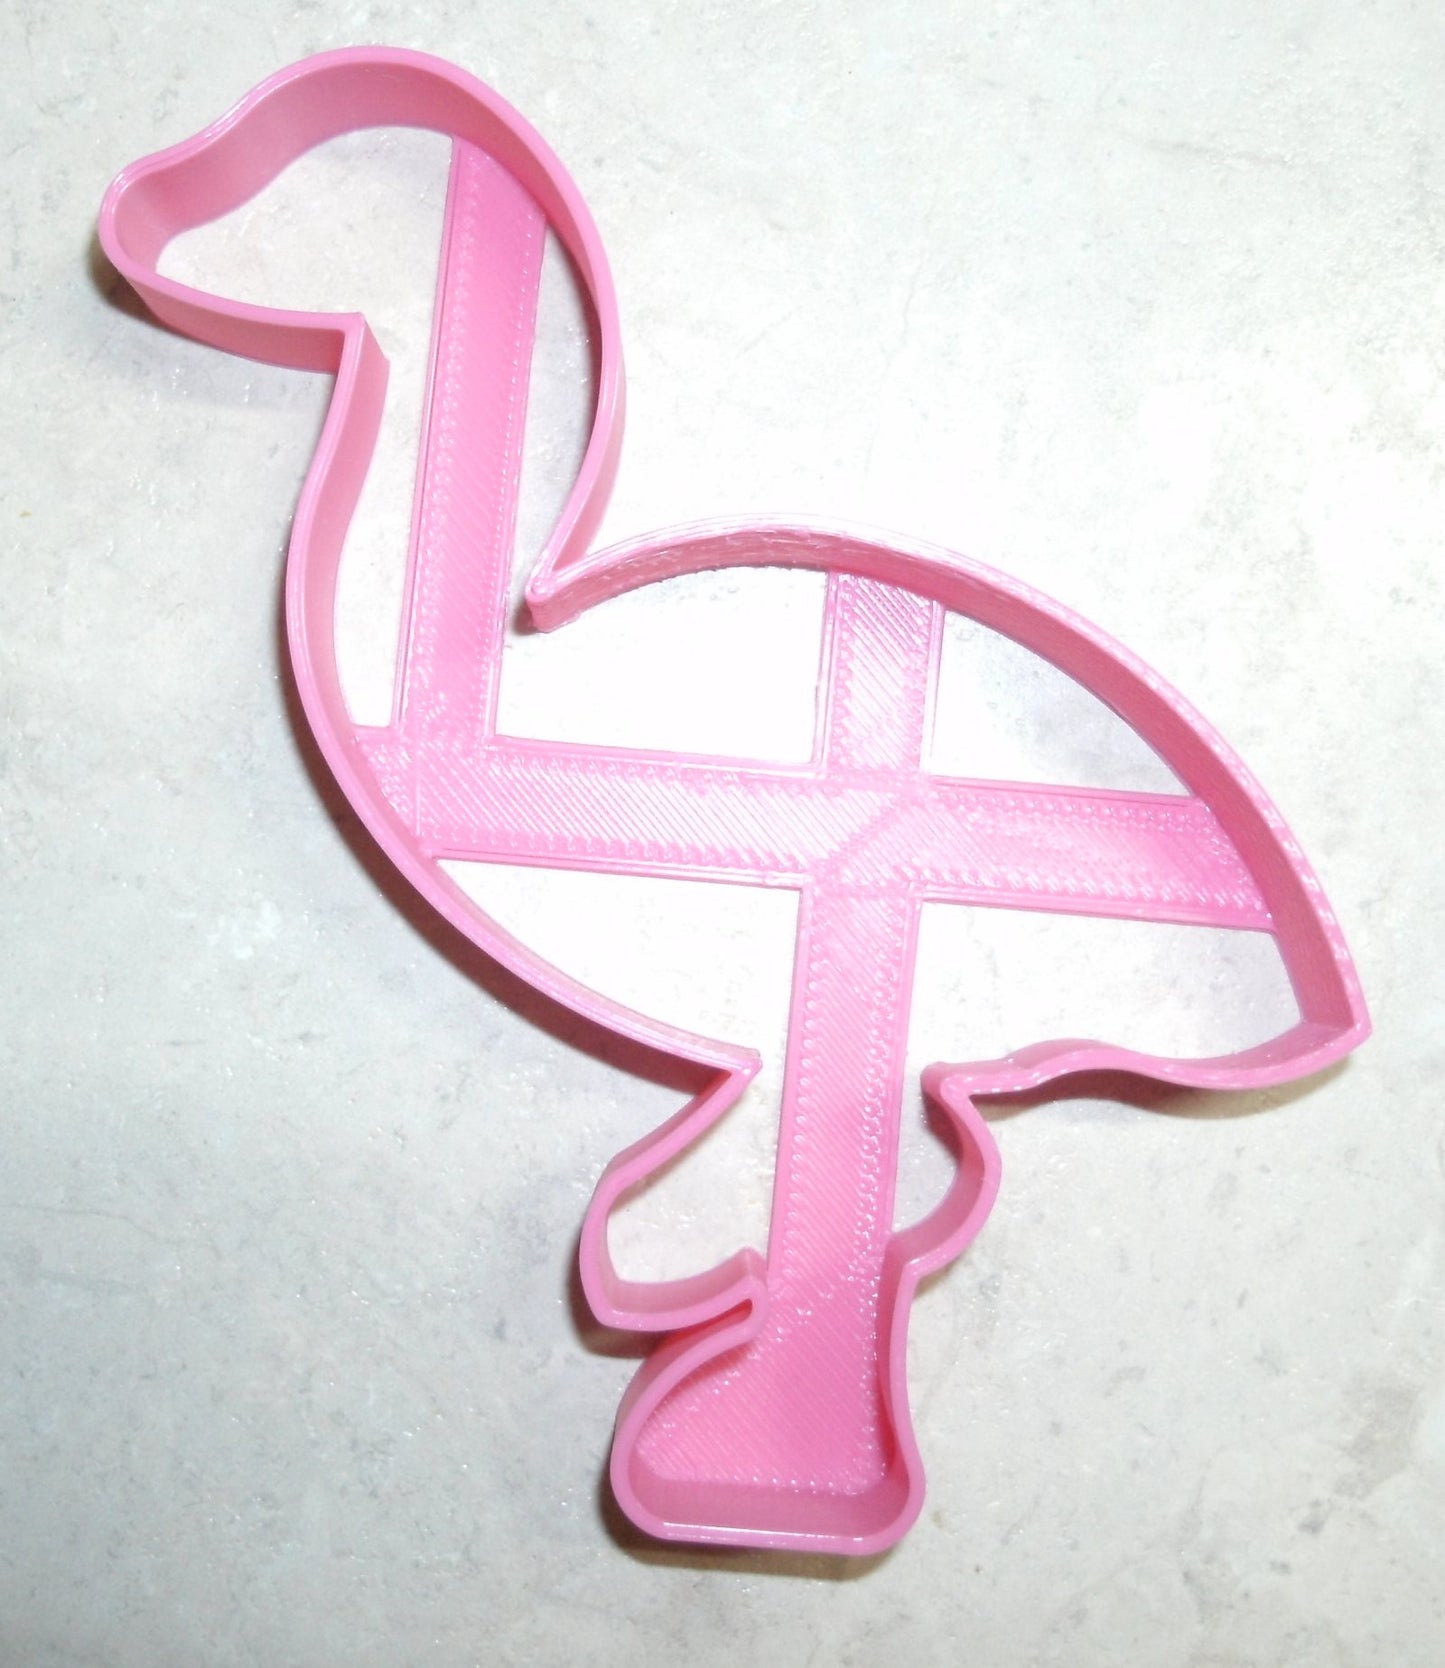 6x Flamingo Tropic Fondant Cutter Cupcake Topper Size 1.75" USA FD679